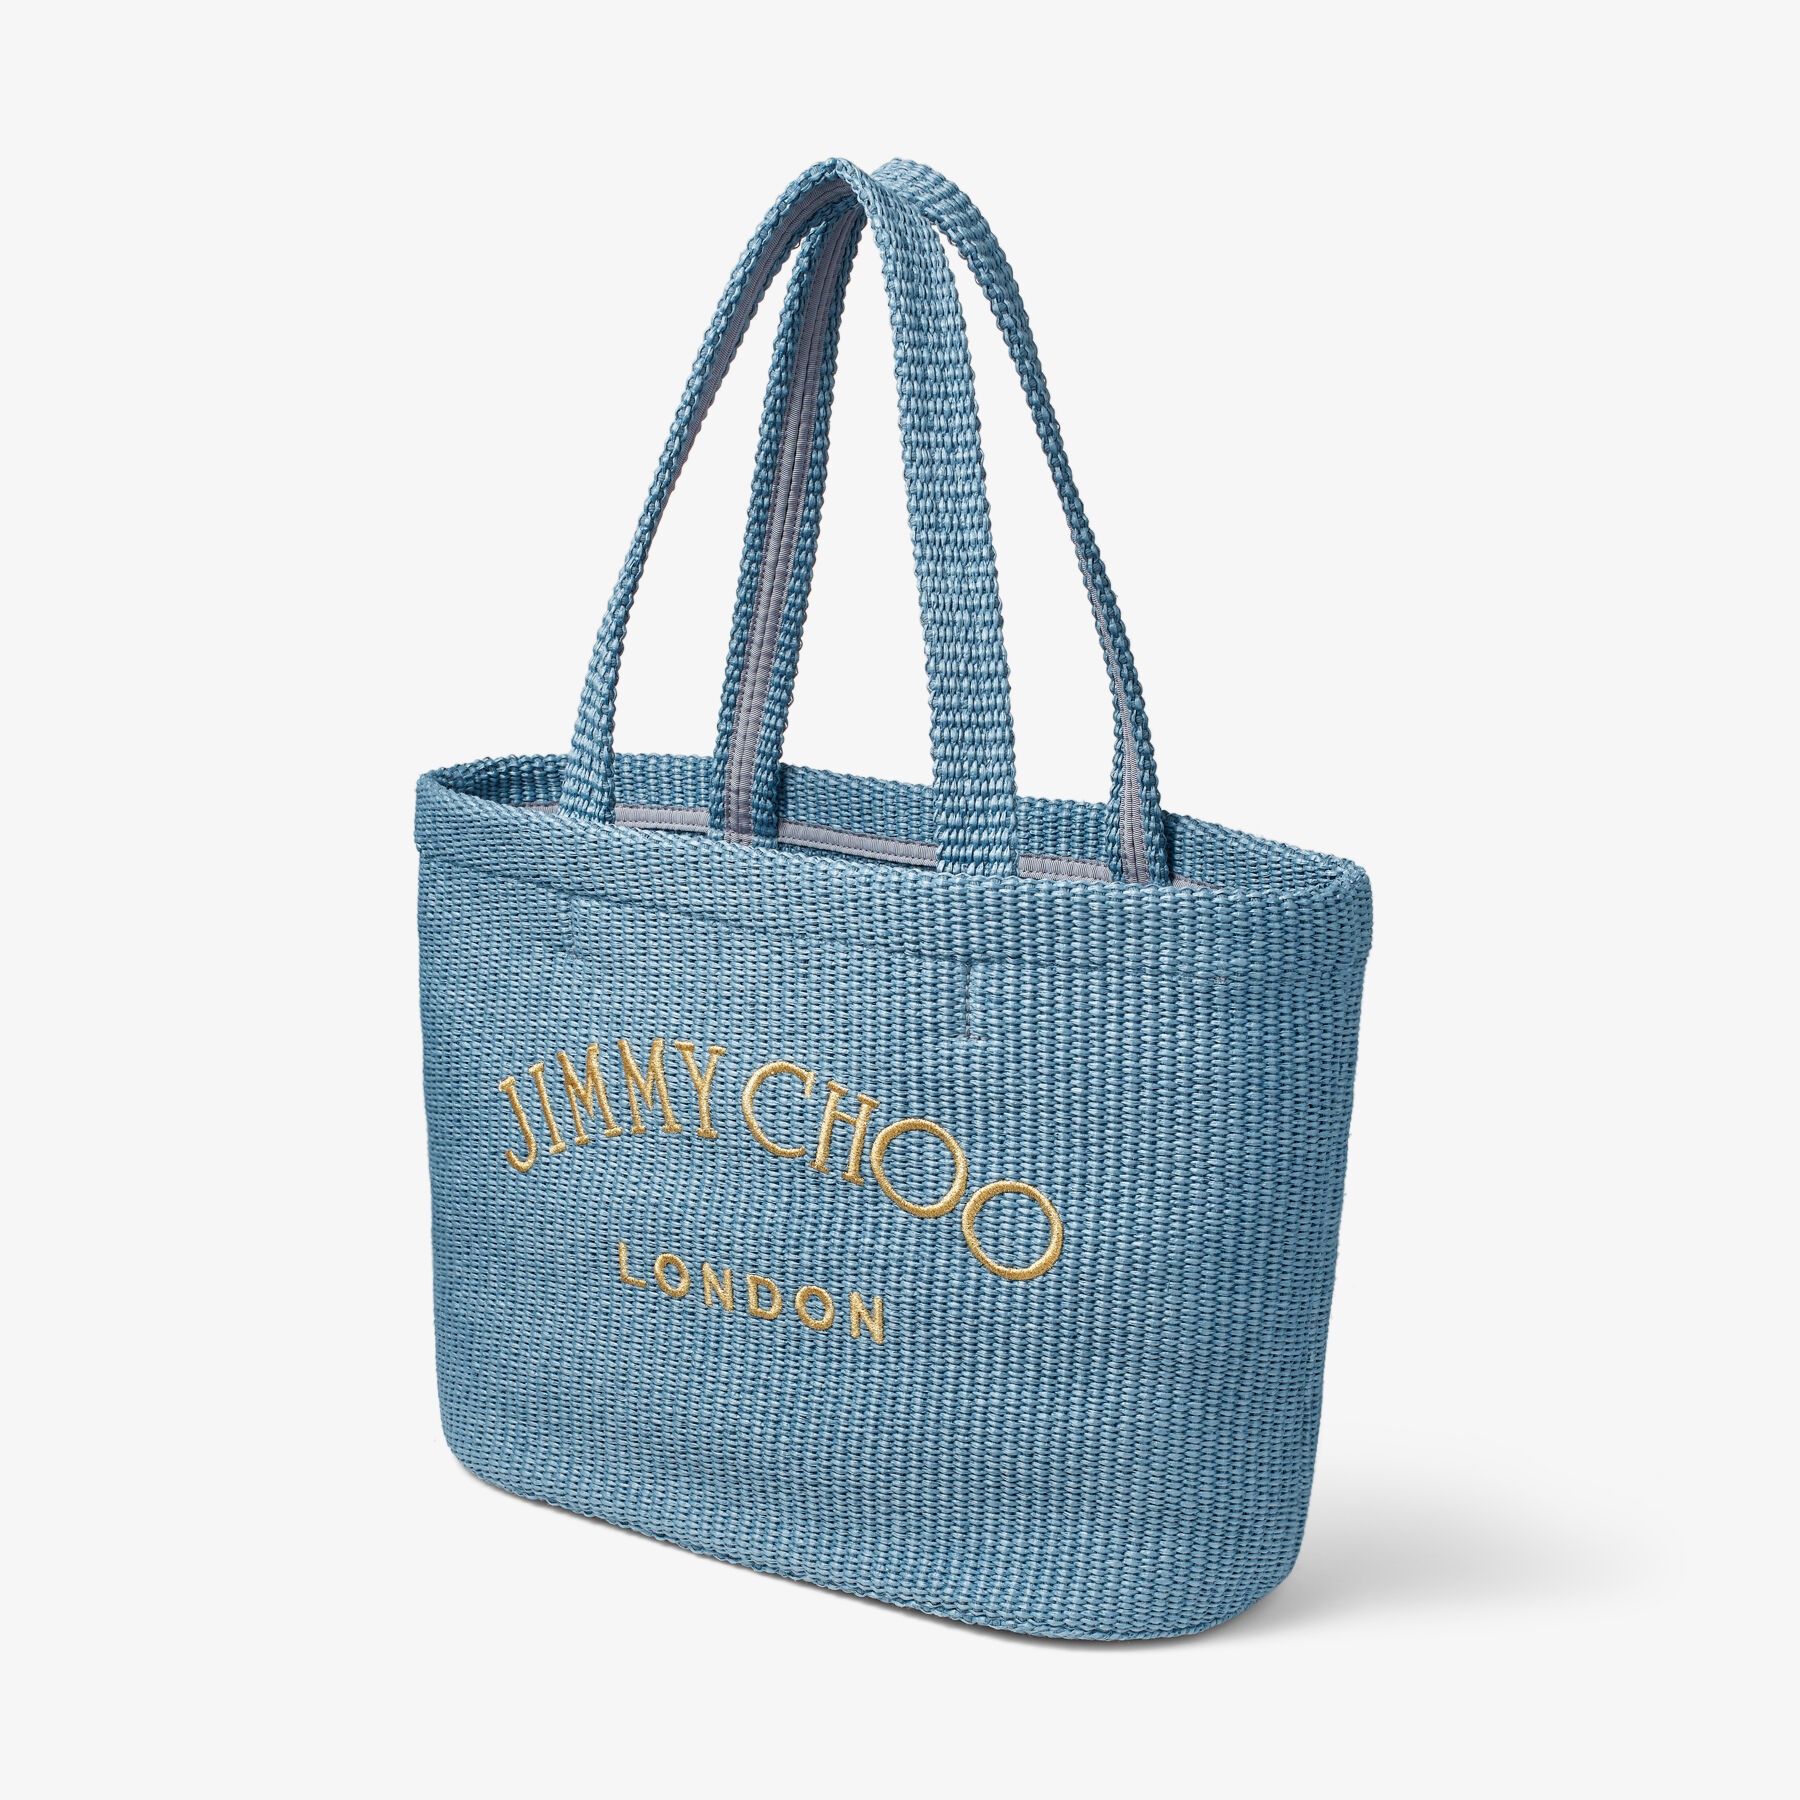 Beach Tote 
Smoky Blue Raffia Tote Bag with Jimmy Choo Embroidery - 4